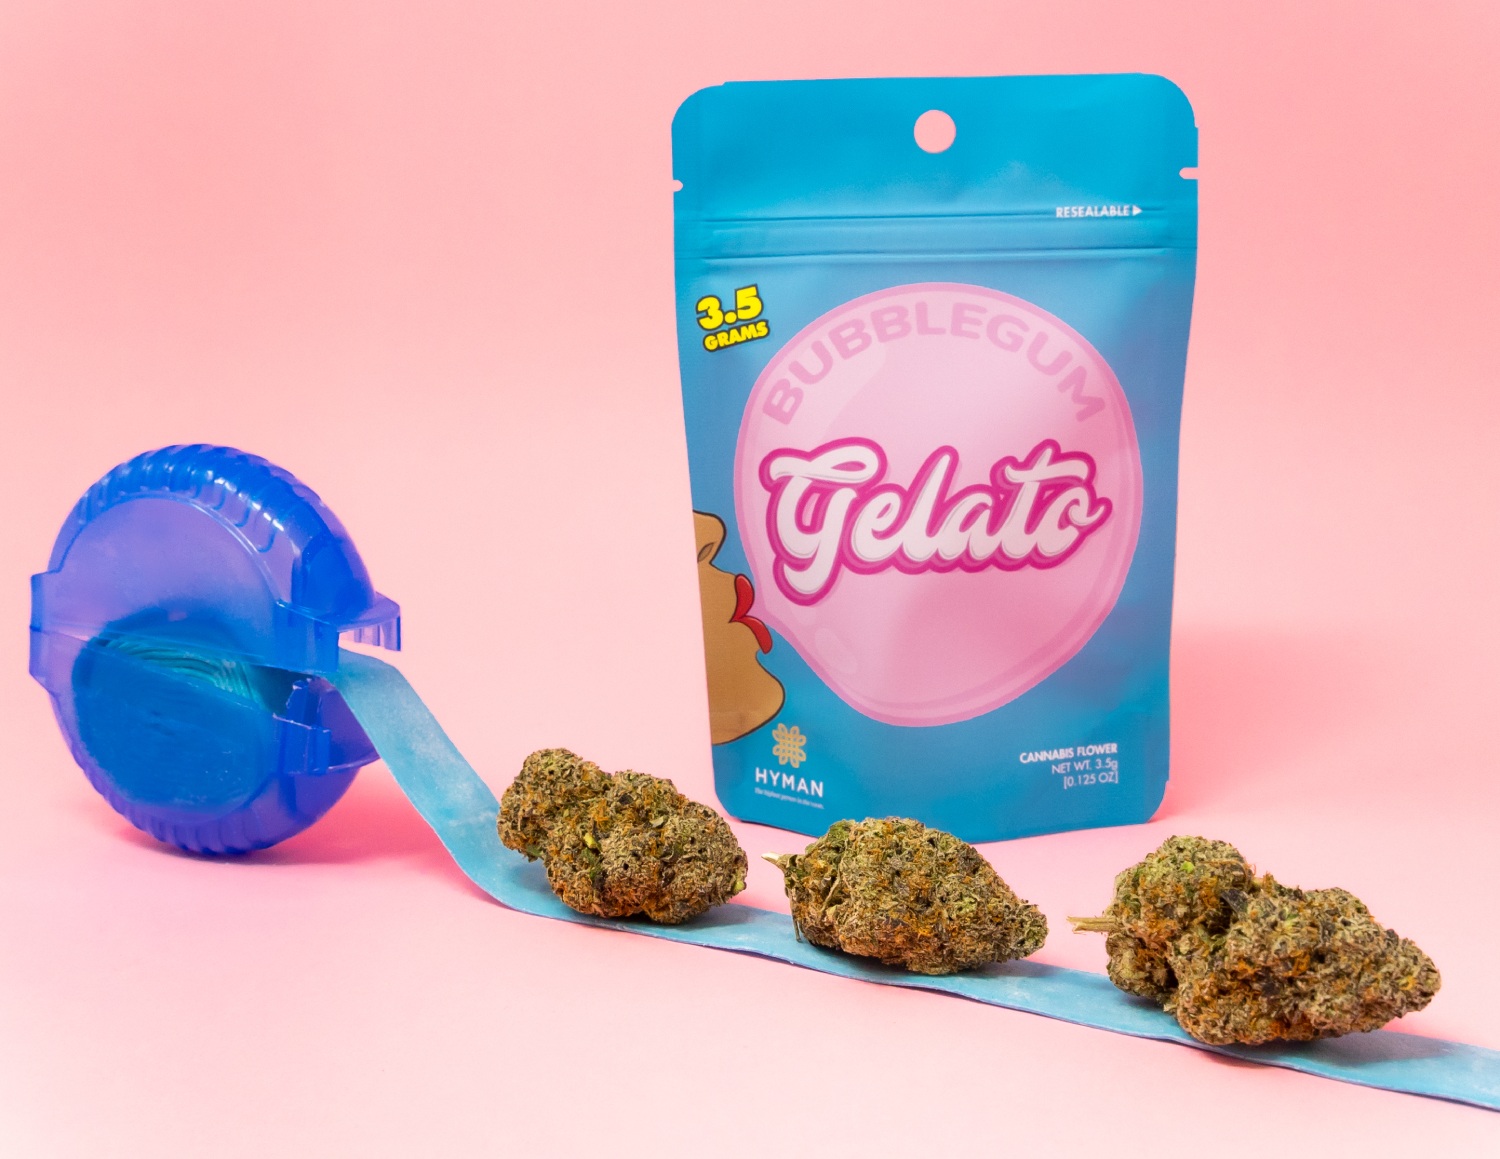 Bubblegum gelato, Weed Buds, Hyman Cannabis Strain